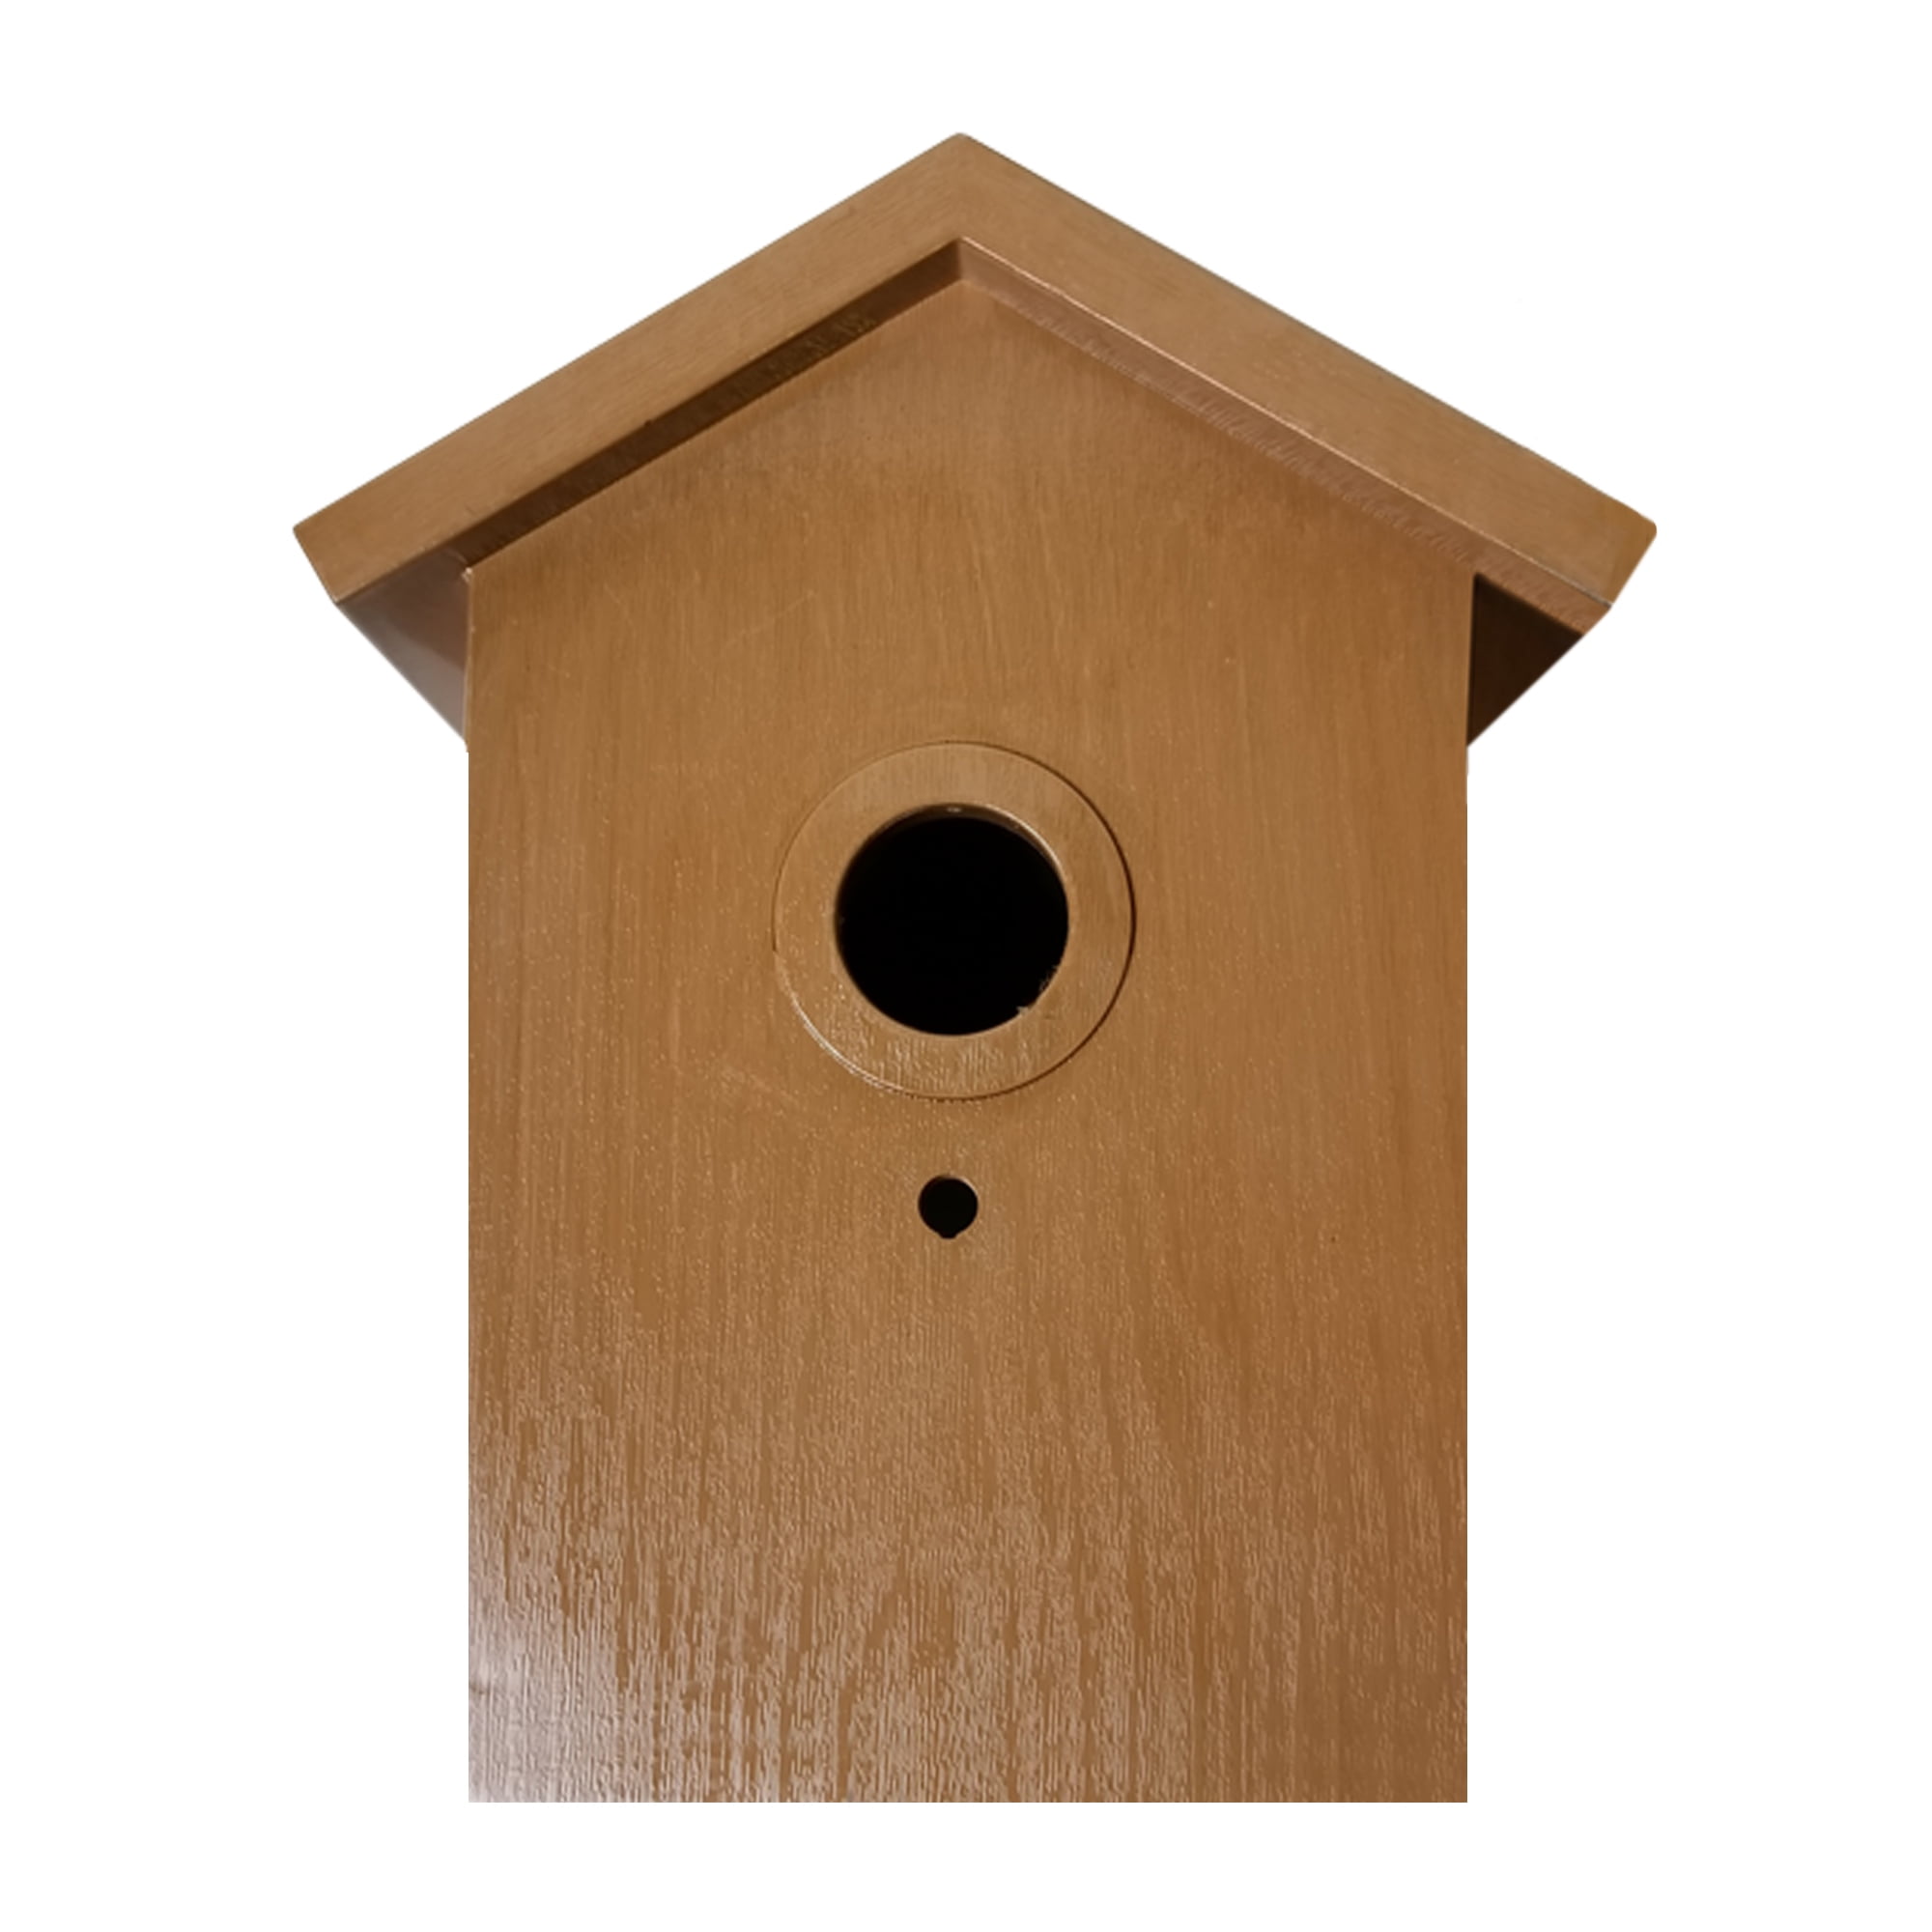 SPY Birdhouse venature del legno Look durevole resistente agli agenti atmosferici Window Mount Bird House 